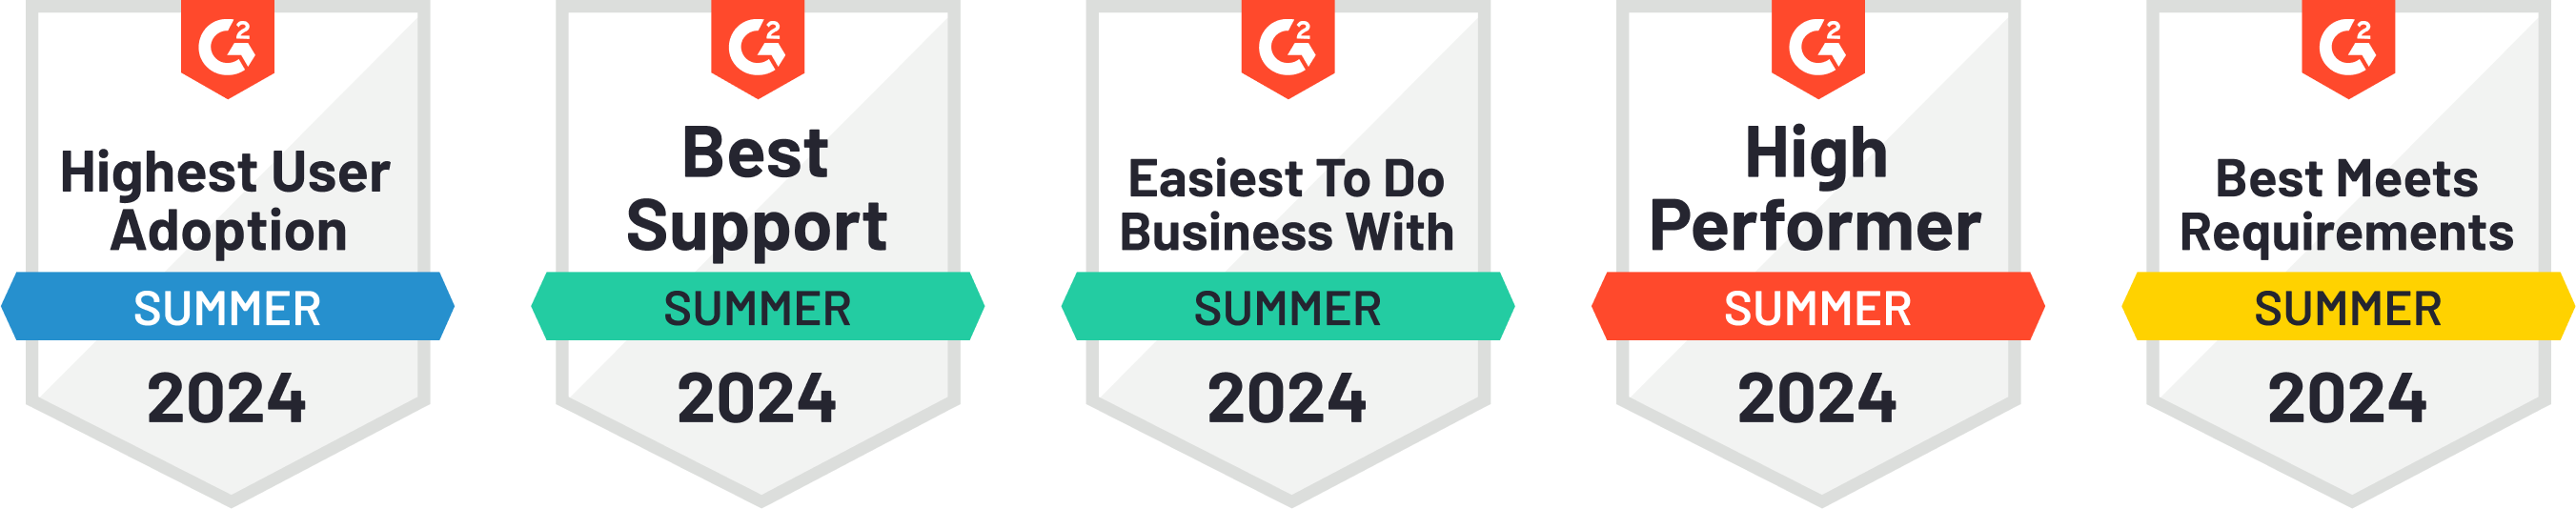 Flatfile's G2 badges: Highest user adoption, Summer 2023; Easiest setup, Summer 2023; Best support, Summer 2023; Best usability, Summer 2023; Best meets requirements, Summer 2023